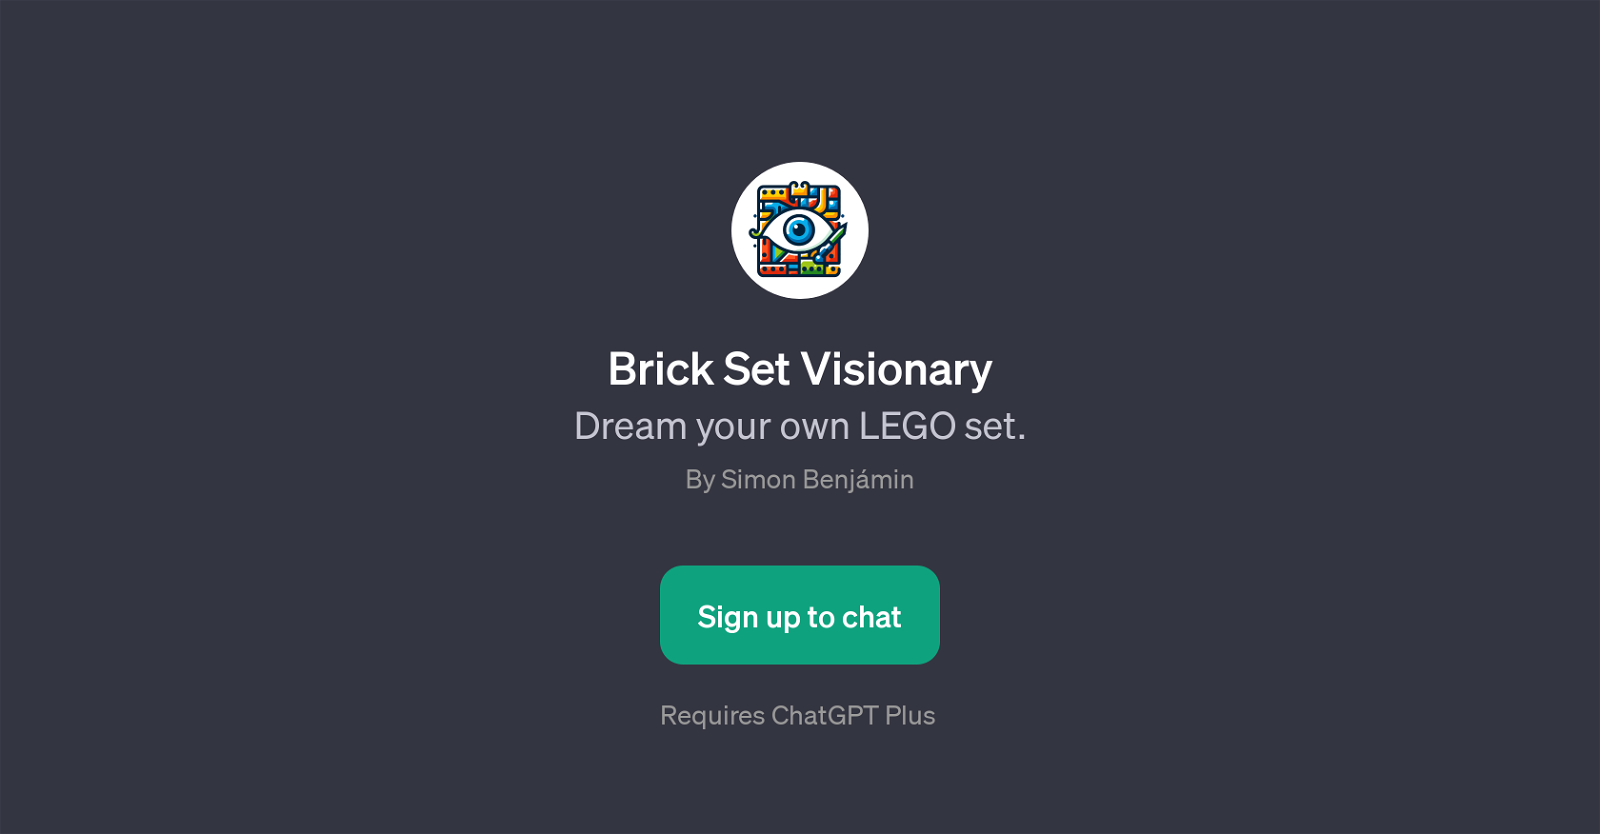 Brick Set Visionary website